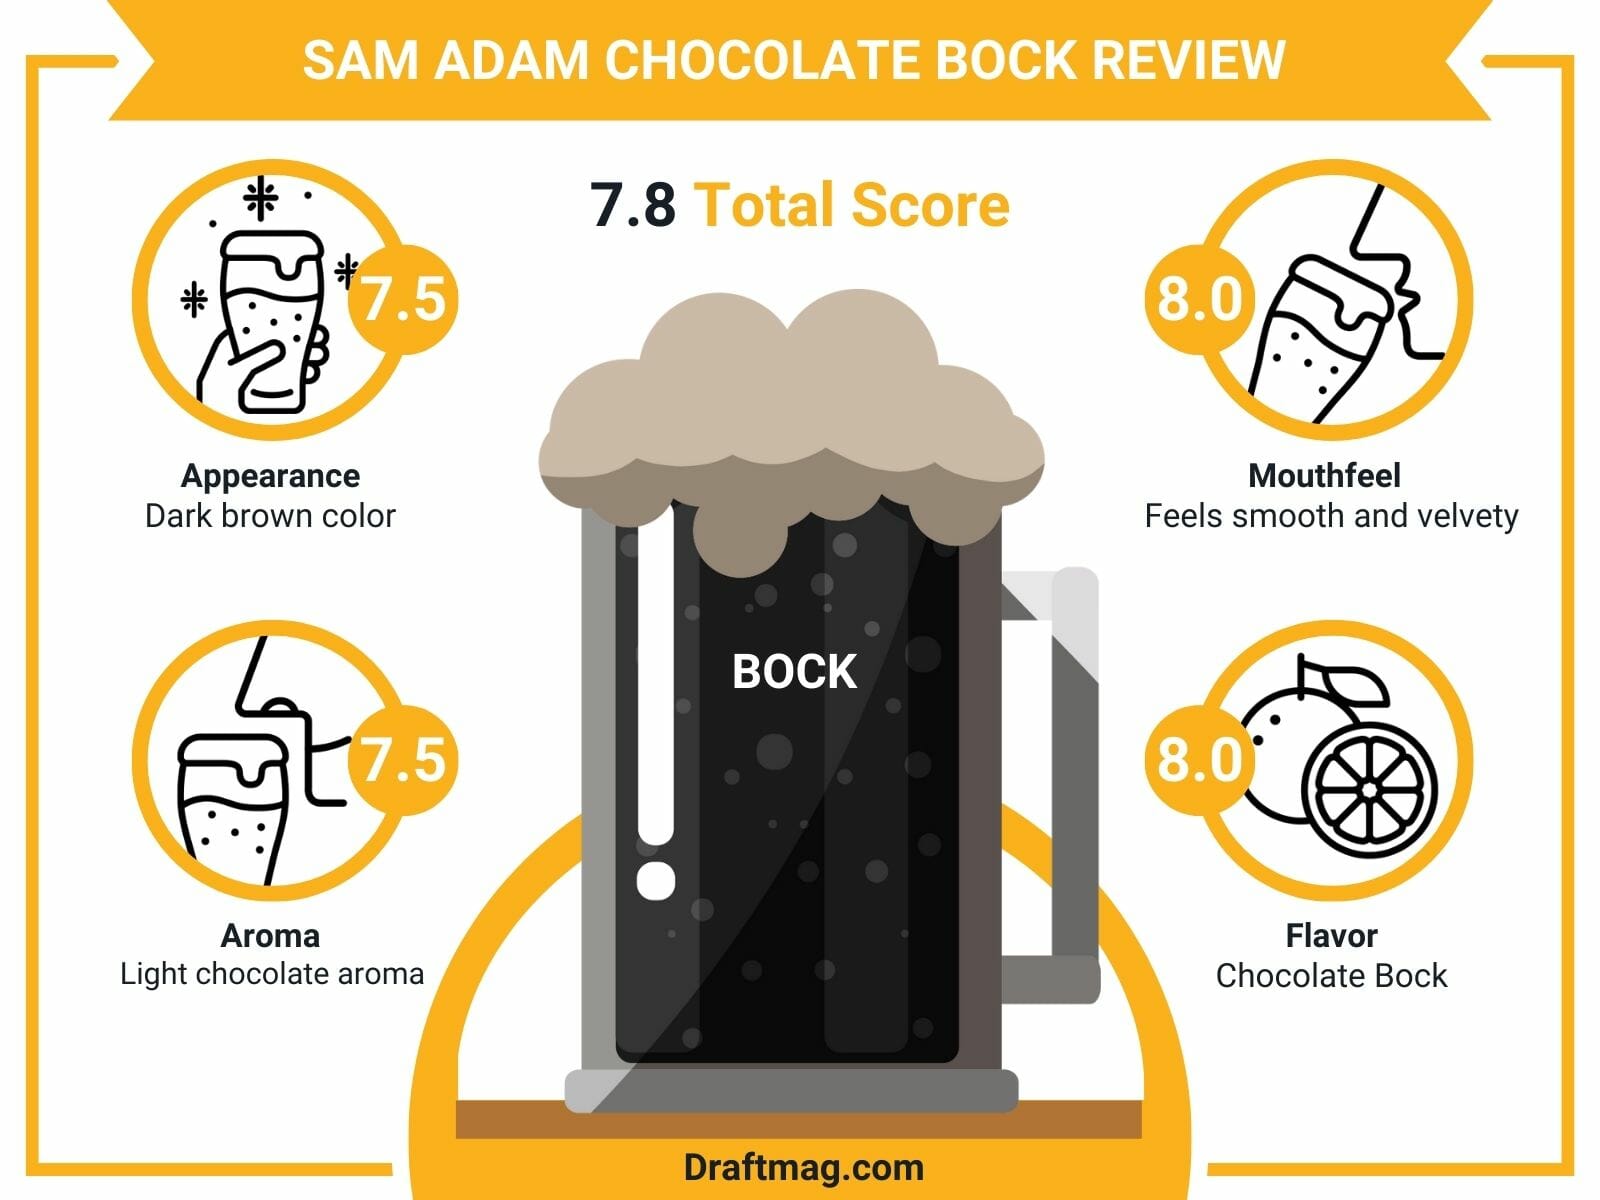 Sam Adam Chocolate Bock Review Infographic